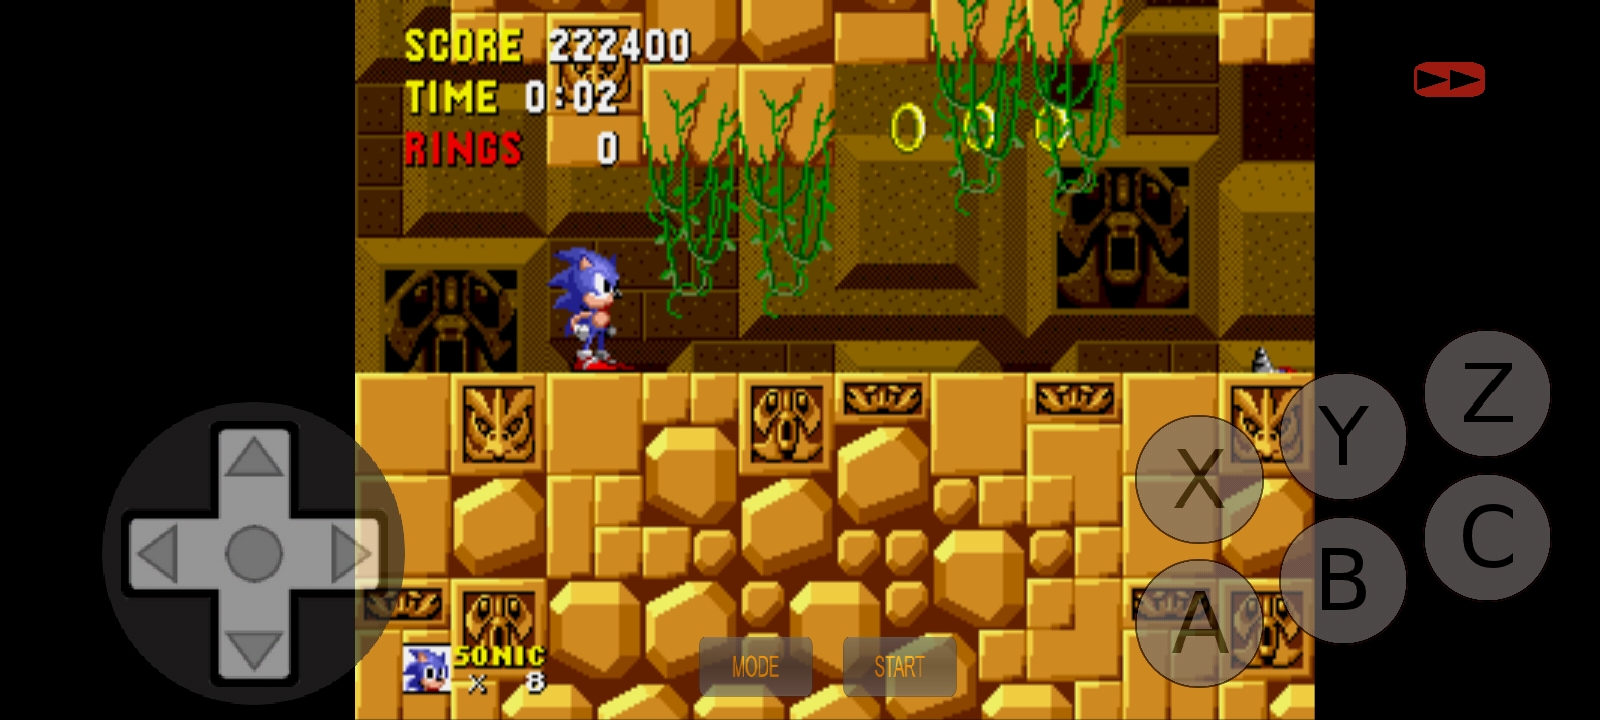 Hauntedprogram: Sonic The Hedgehog [One Life Only] (Sega Genesis / MegaDrive Emulated) 222,400 points on 2022-11-27 09:14:03